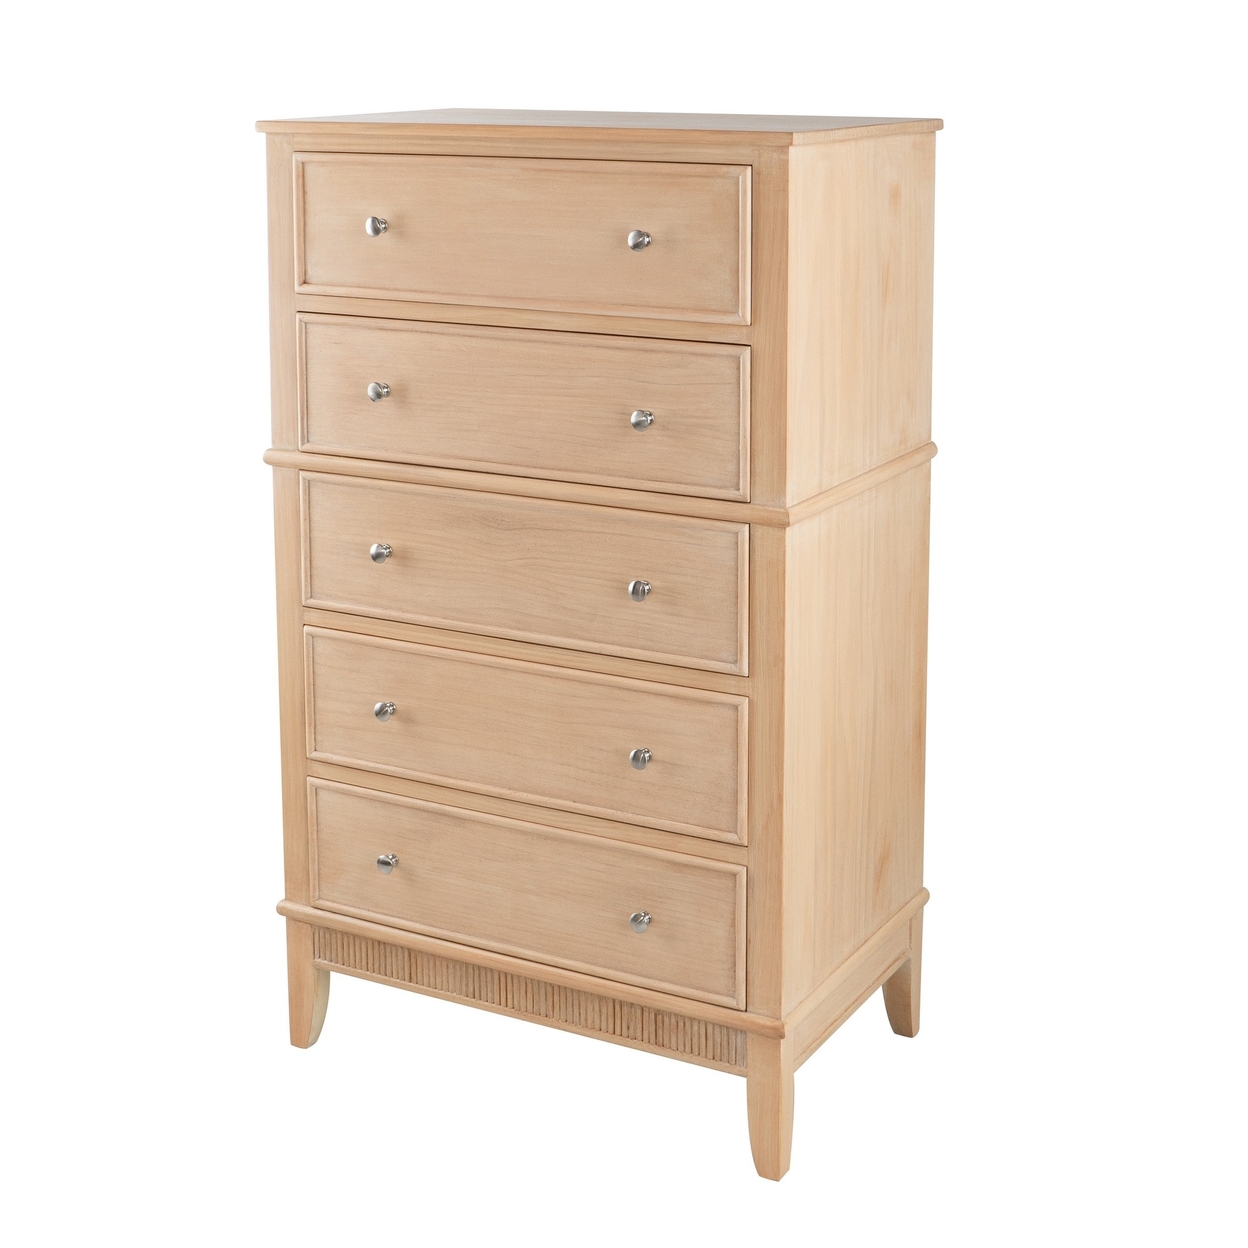 46 Inch Tall Dresser Chest, Pine Wood, 5 Drawers, Textured Natural Brown- Saltoro Sherpi